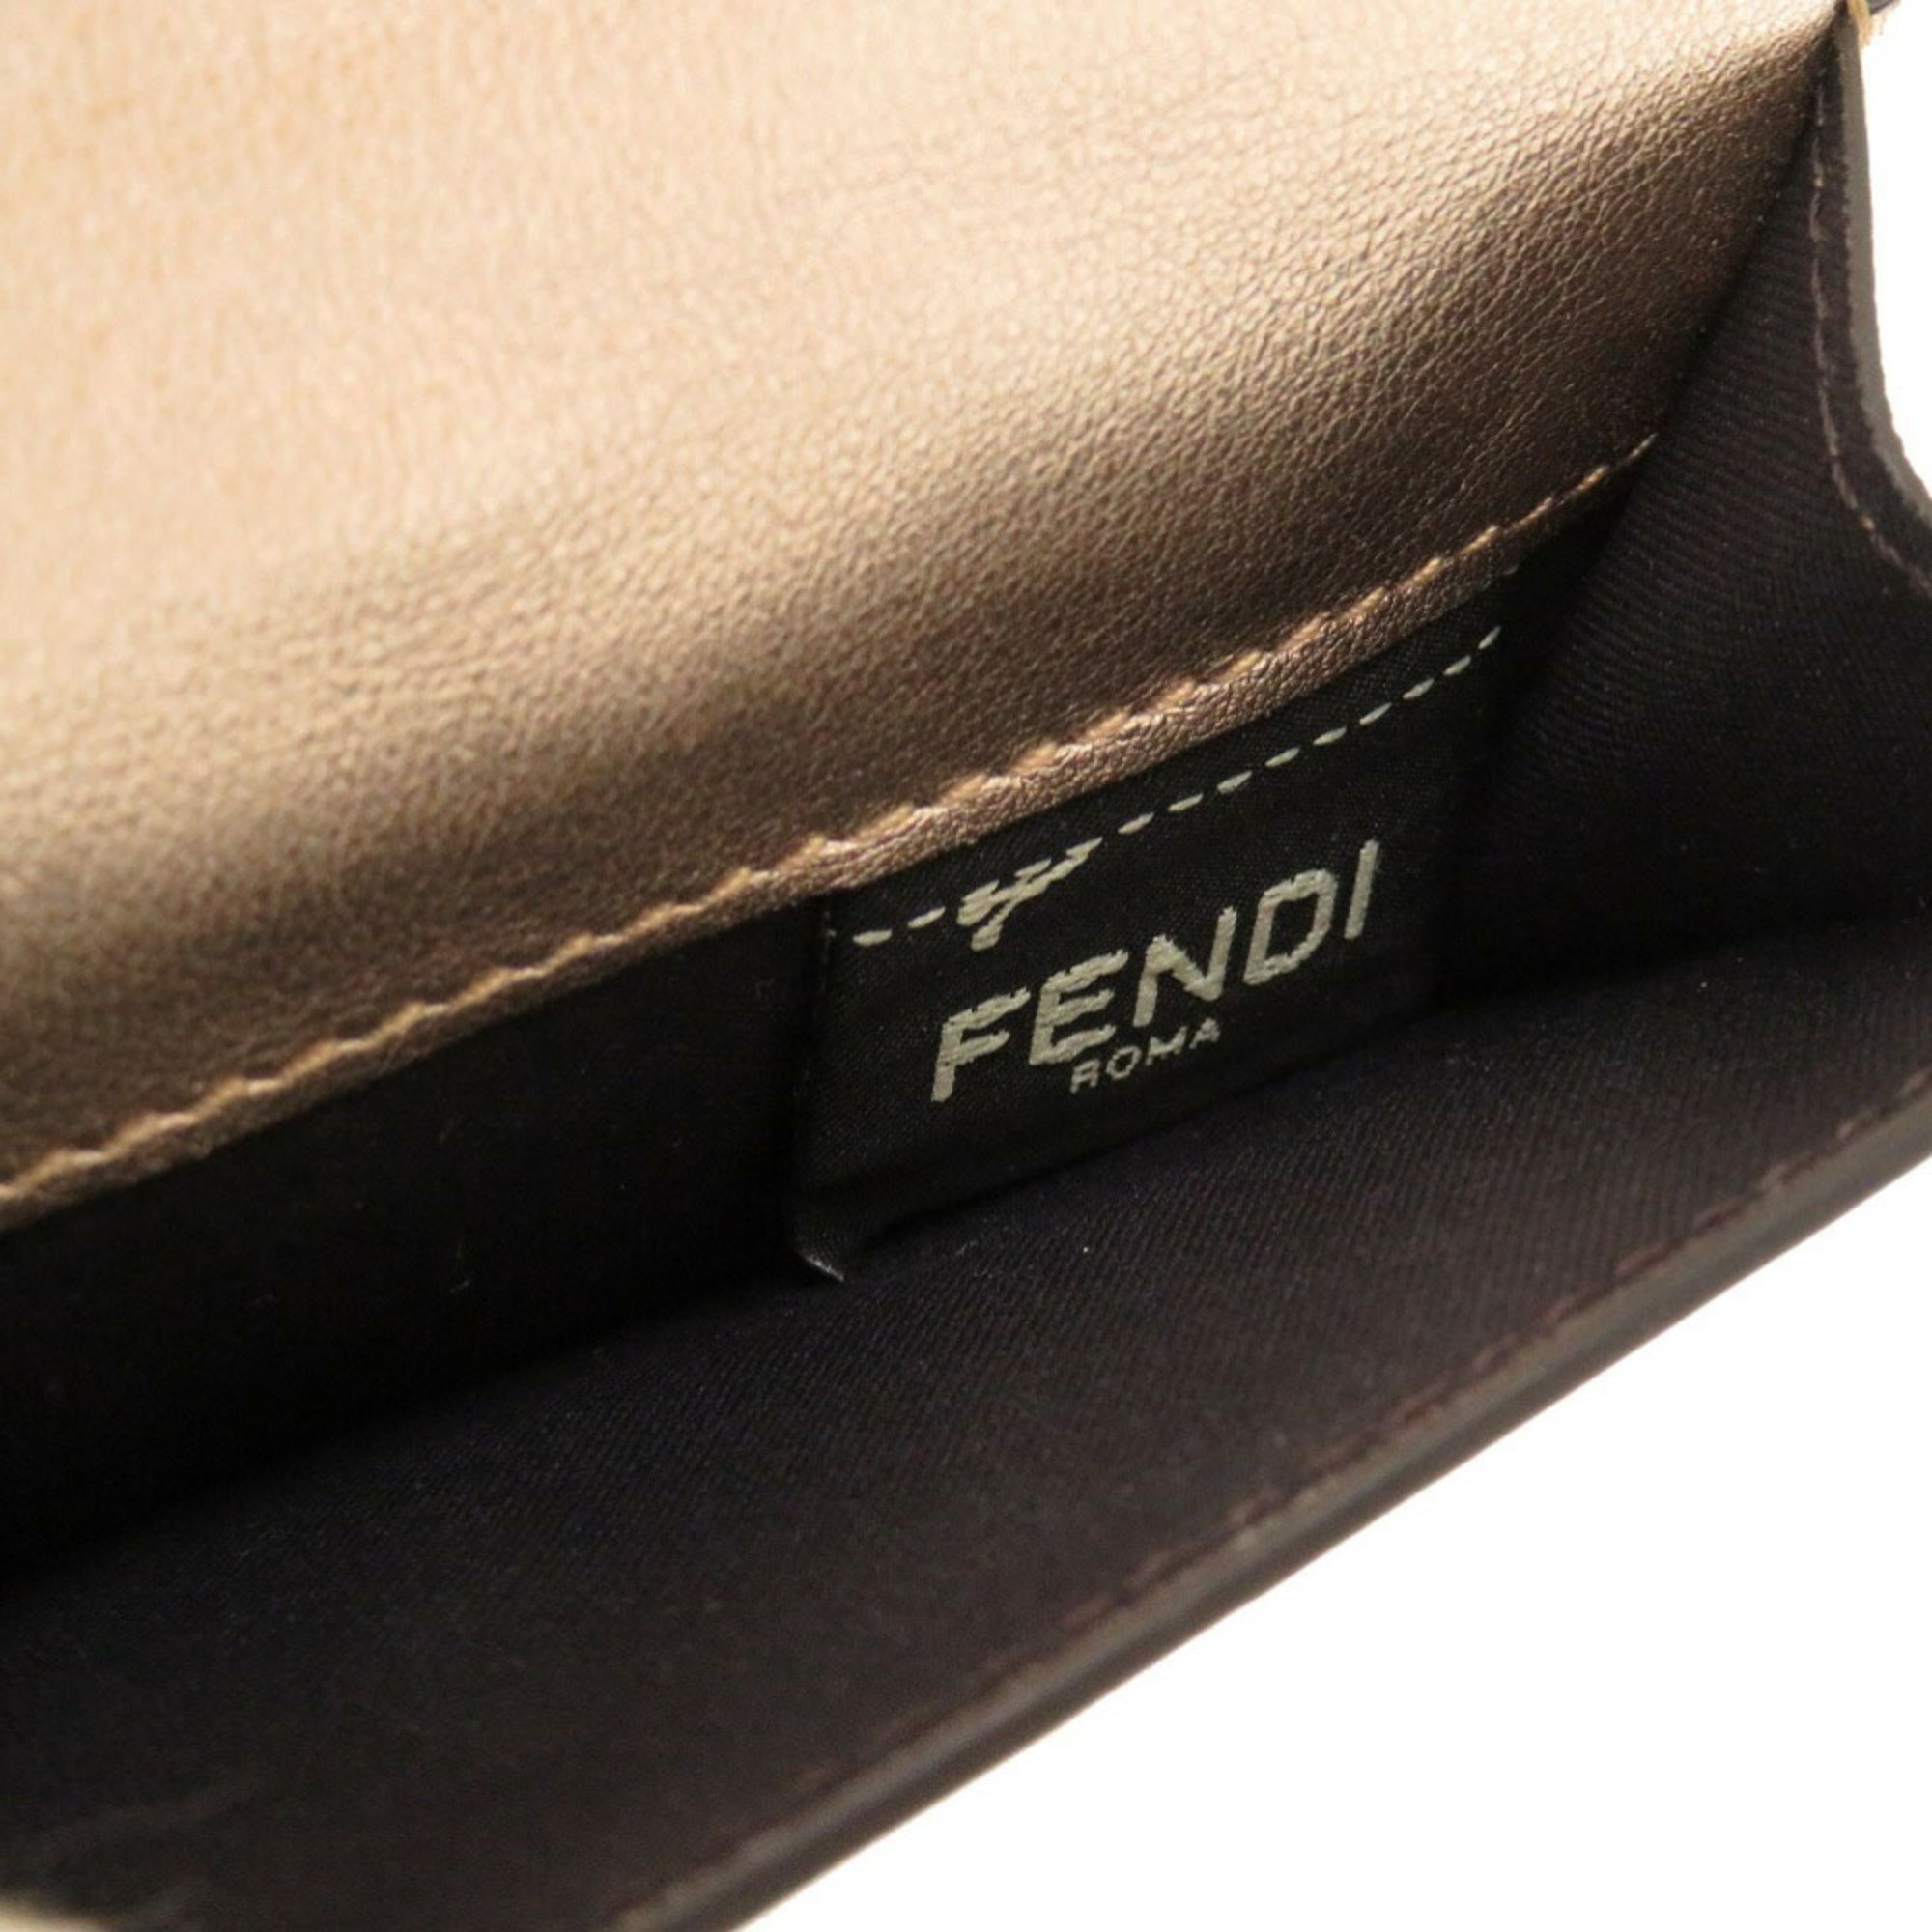 Fendi Zucca Compact Wallet 8M0395 Leather Pink Gold Tri-fold 0370 FENDI